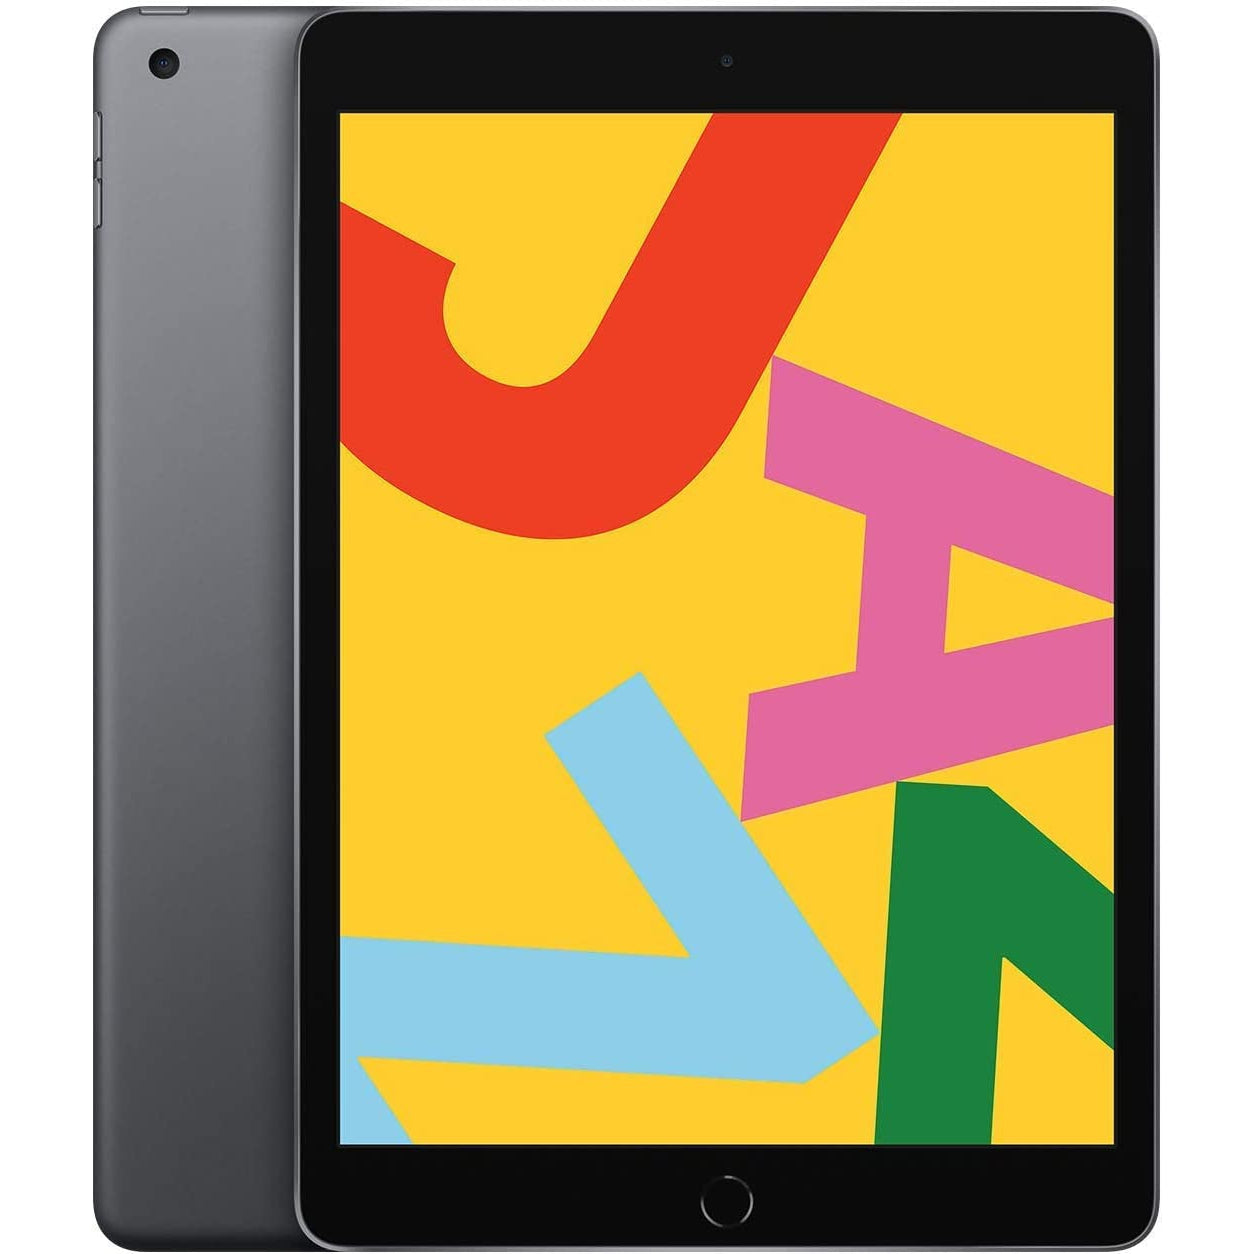 Apple iPad 7th Gen, 10.2" Wi-Fi + Cell 128GB Tablet - MW6E2B/A - Space Grey - Refurbished Good